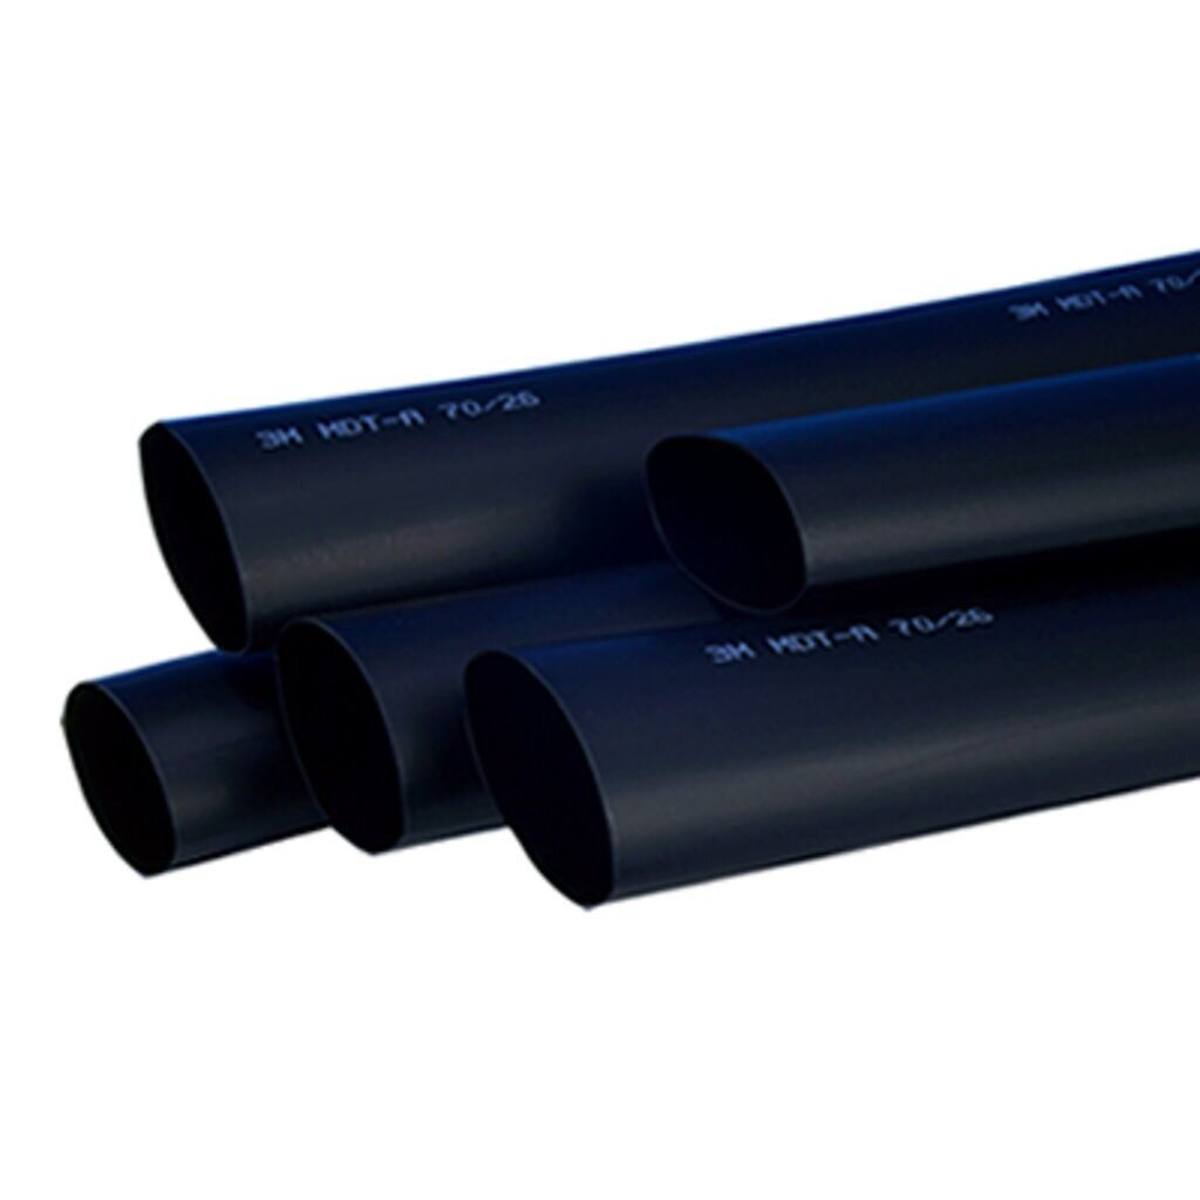 3M MDT-A Medium-wall heat-shrink tubing with adhesive, black, 32/7.5 mm, 1 m